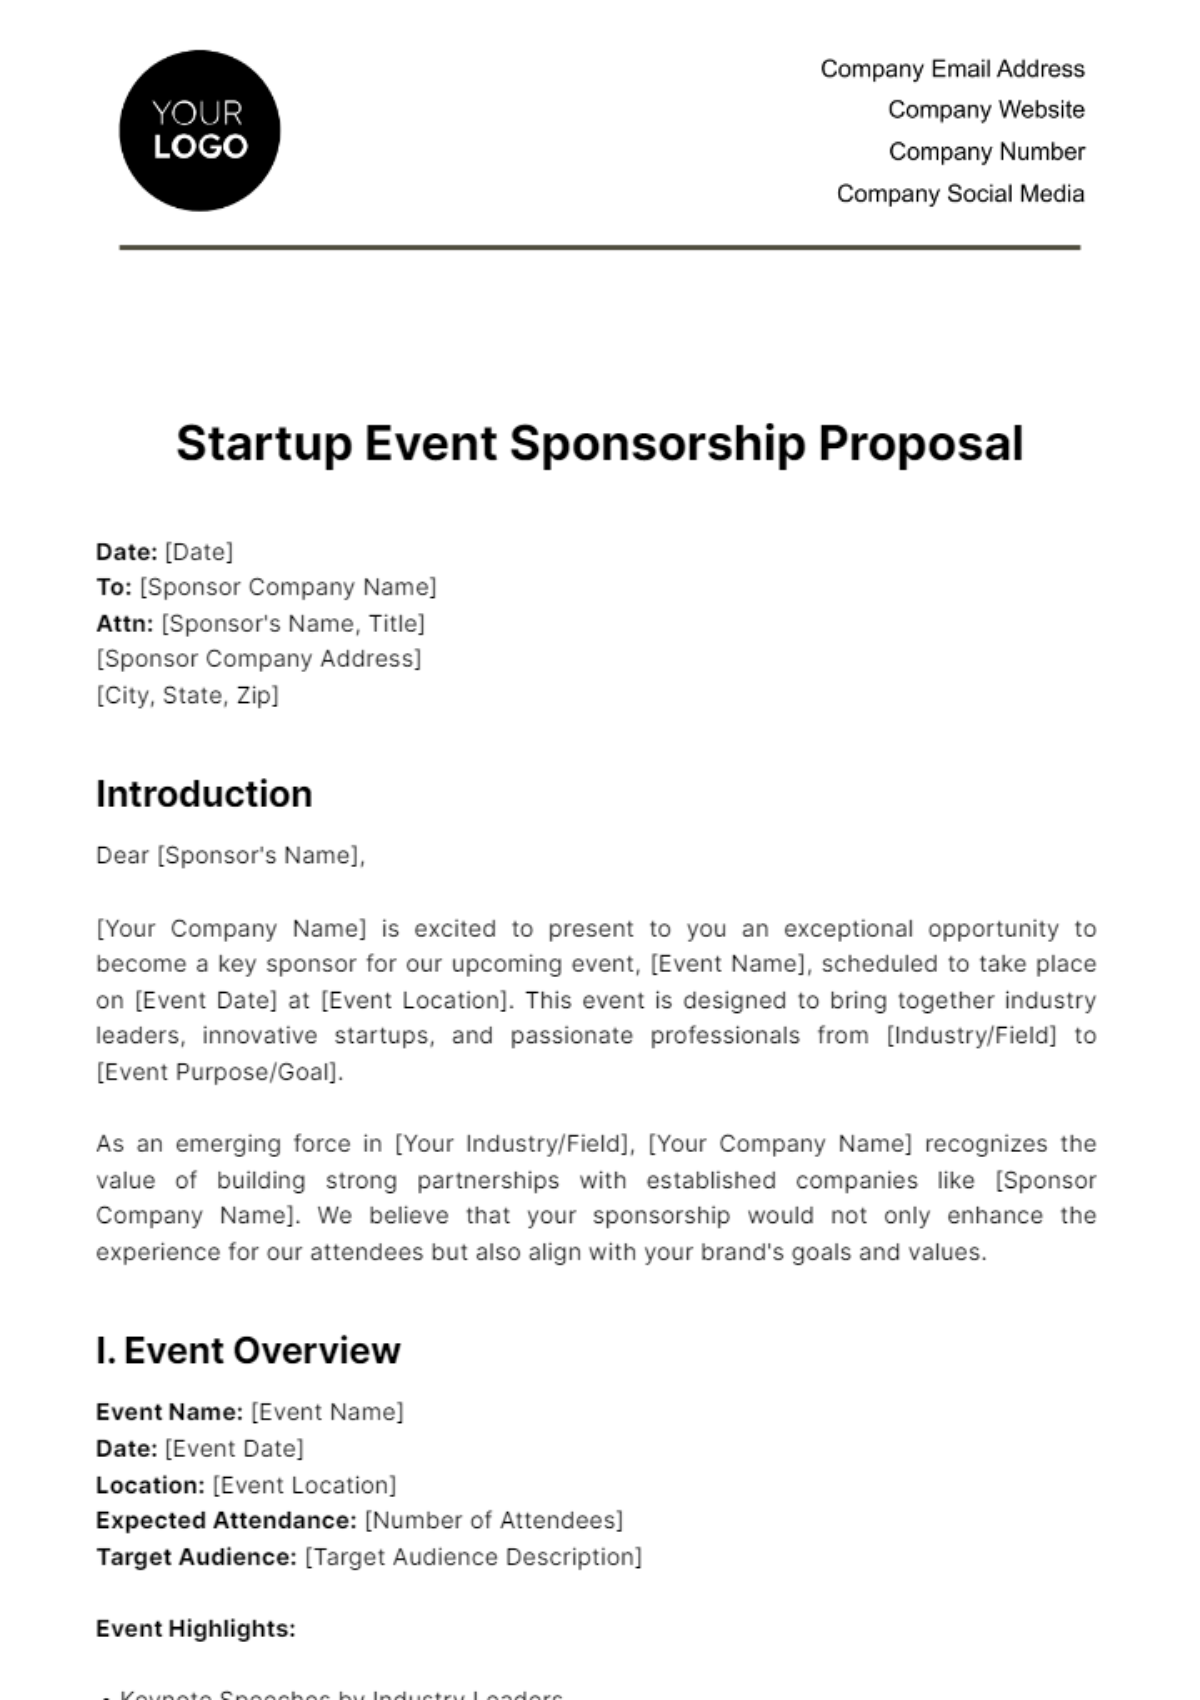 Startup Event Sponsorship Proposal Template